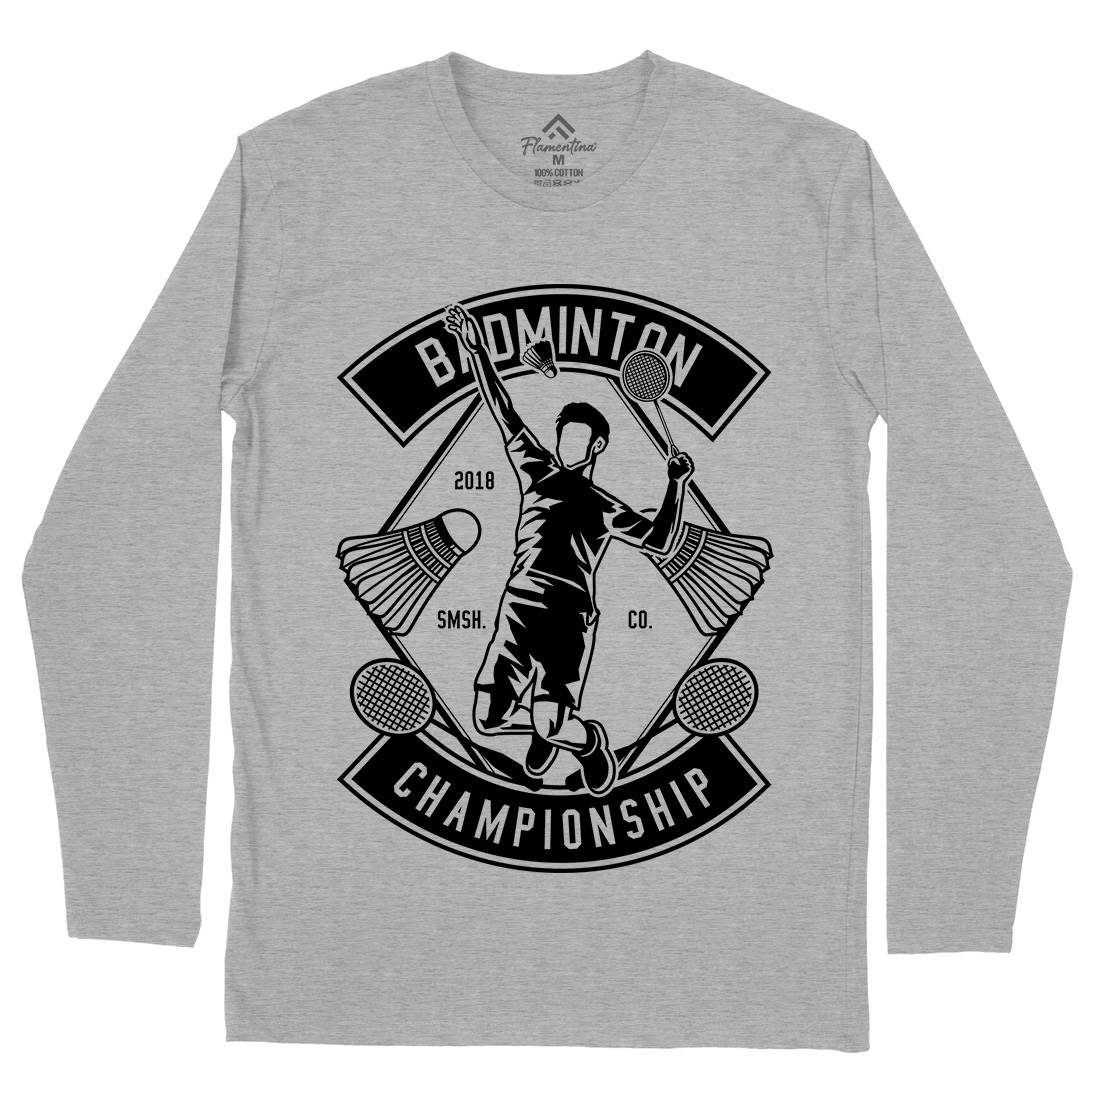 Badminton Championship Mens Long Sleeve T-Shirt Sport B486